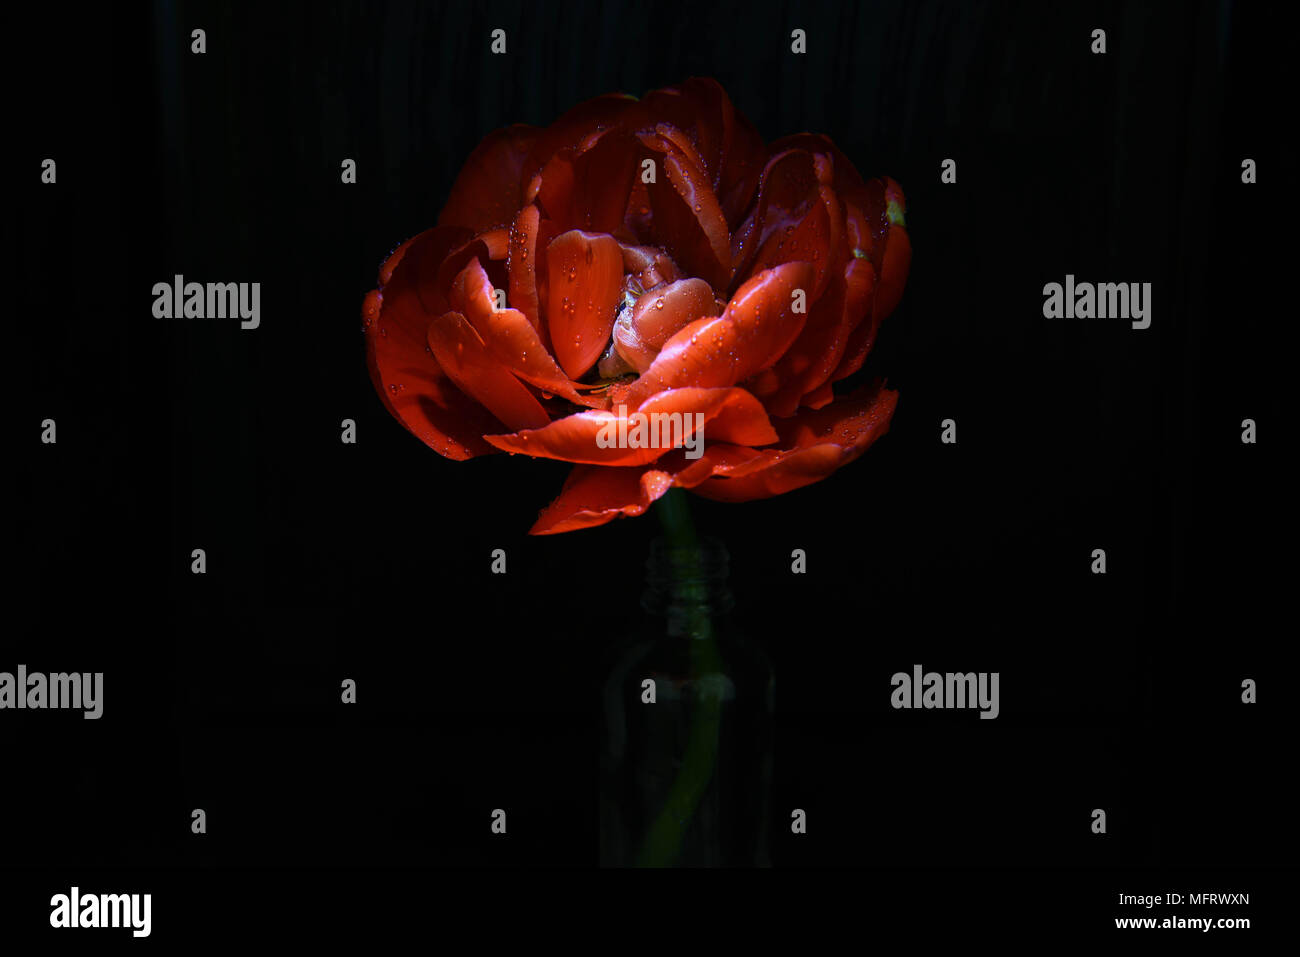 dark still life with red flower Stock Photo